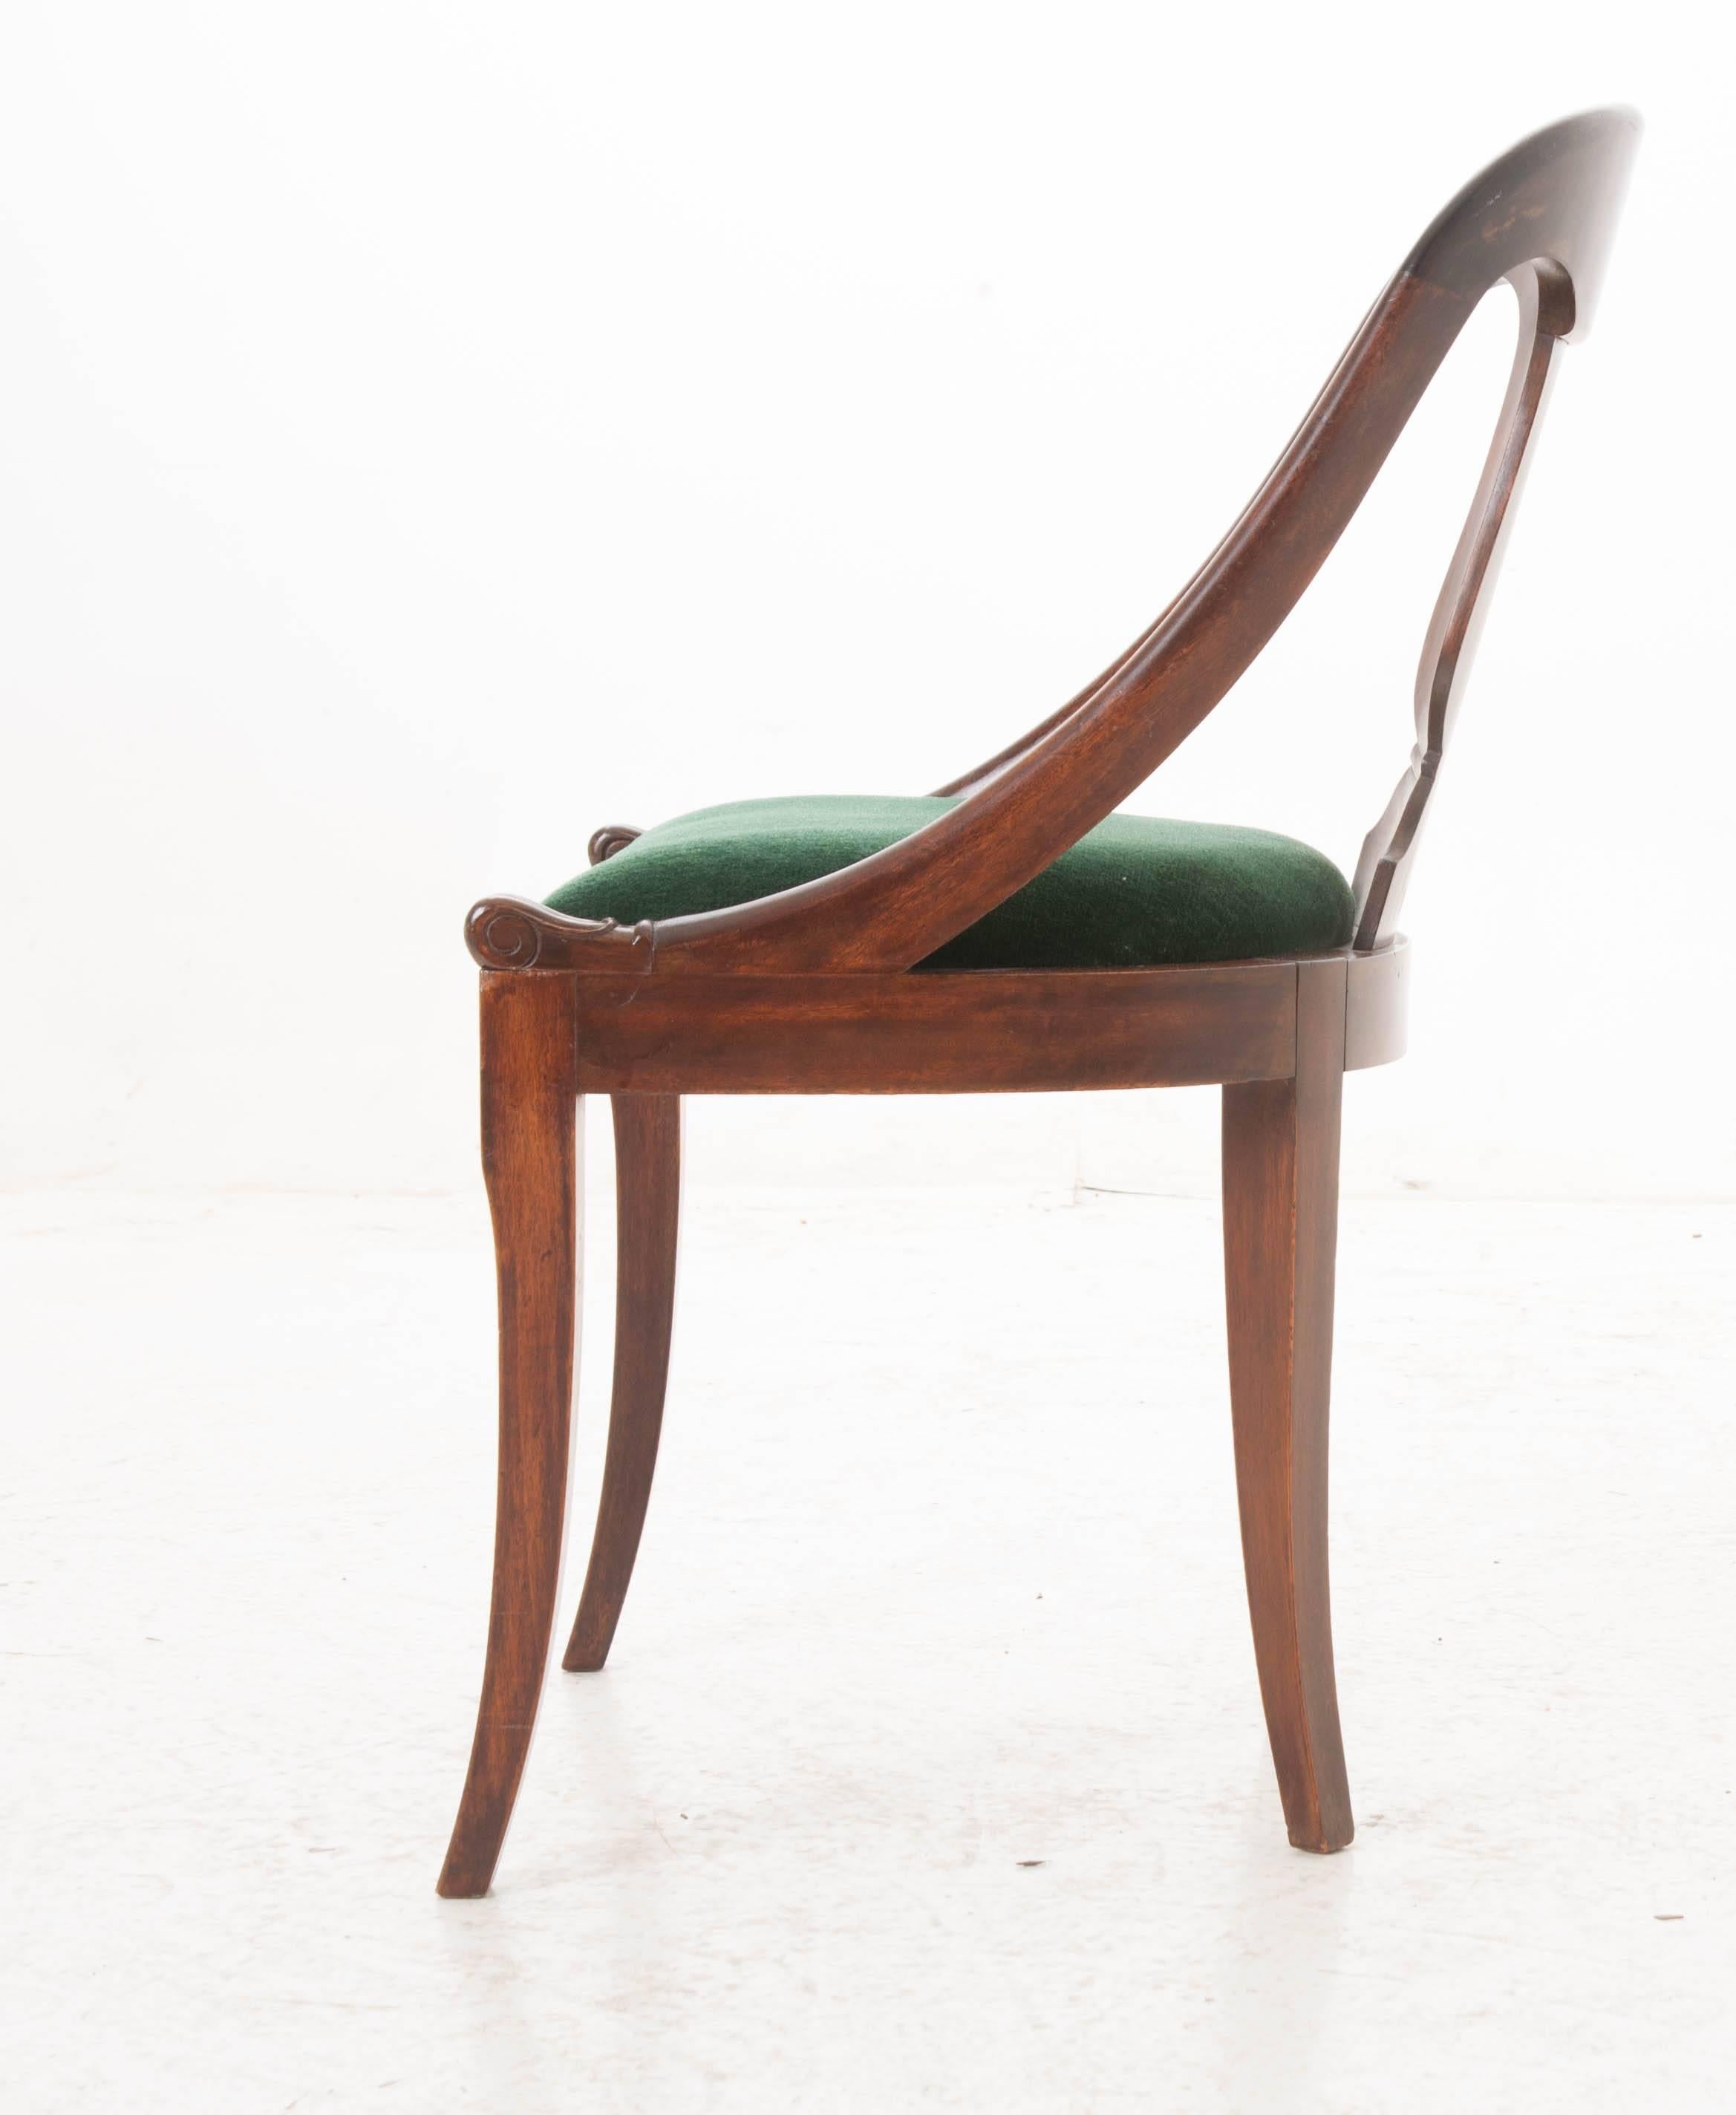 20th Century English Mahogany Spoon Back Side Chair